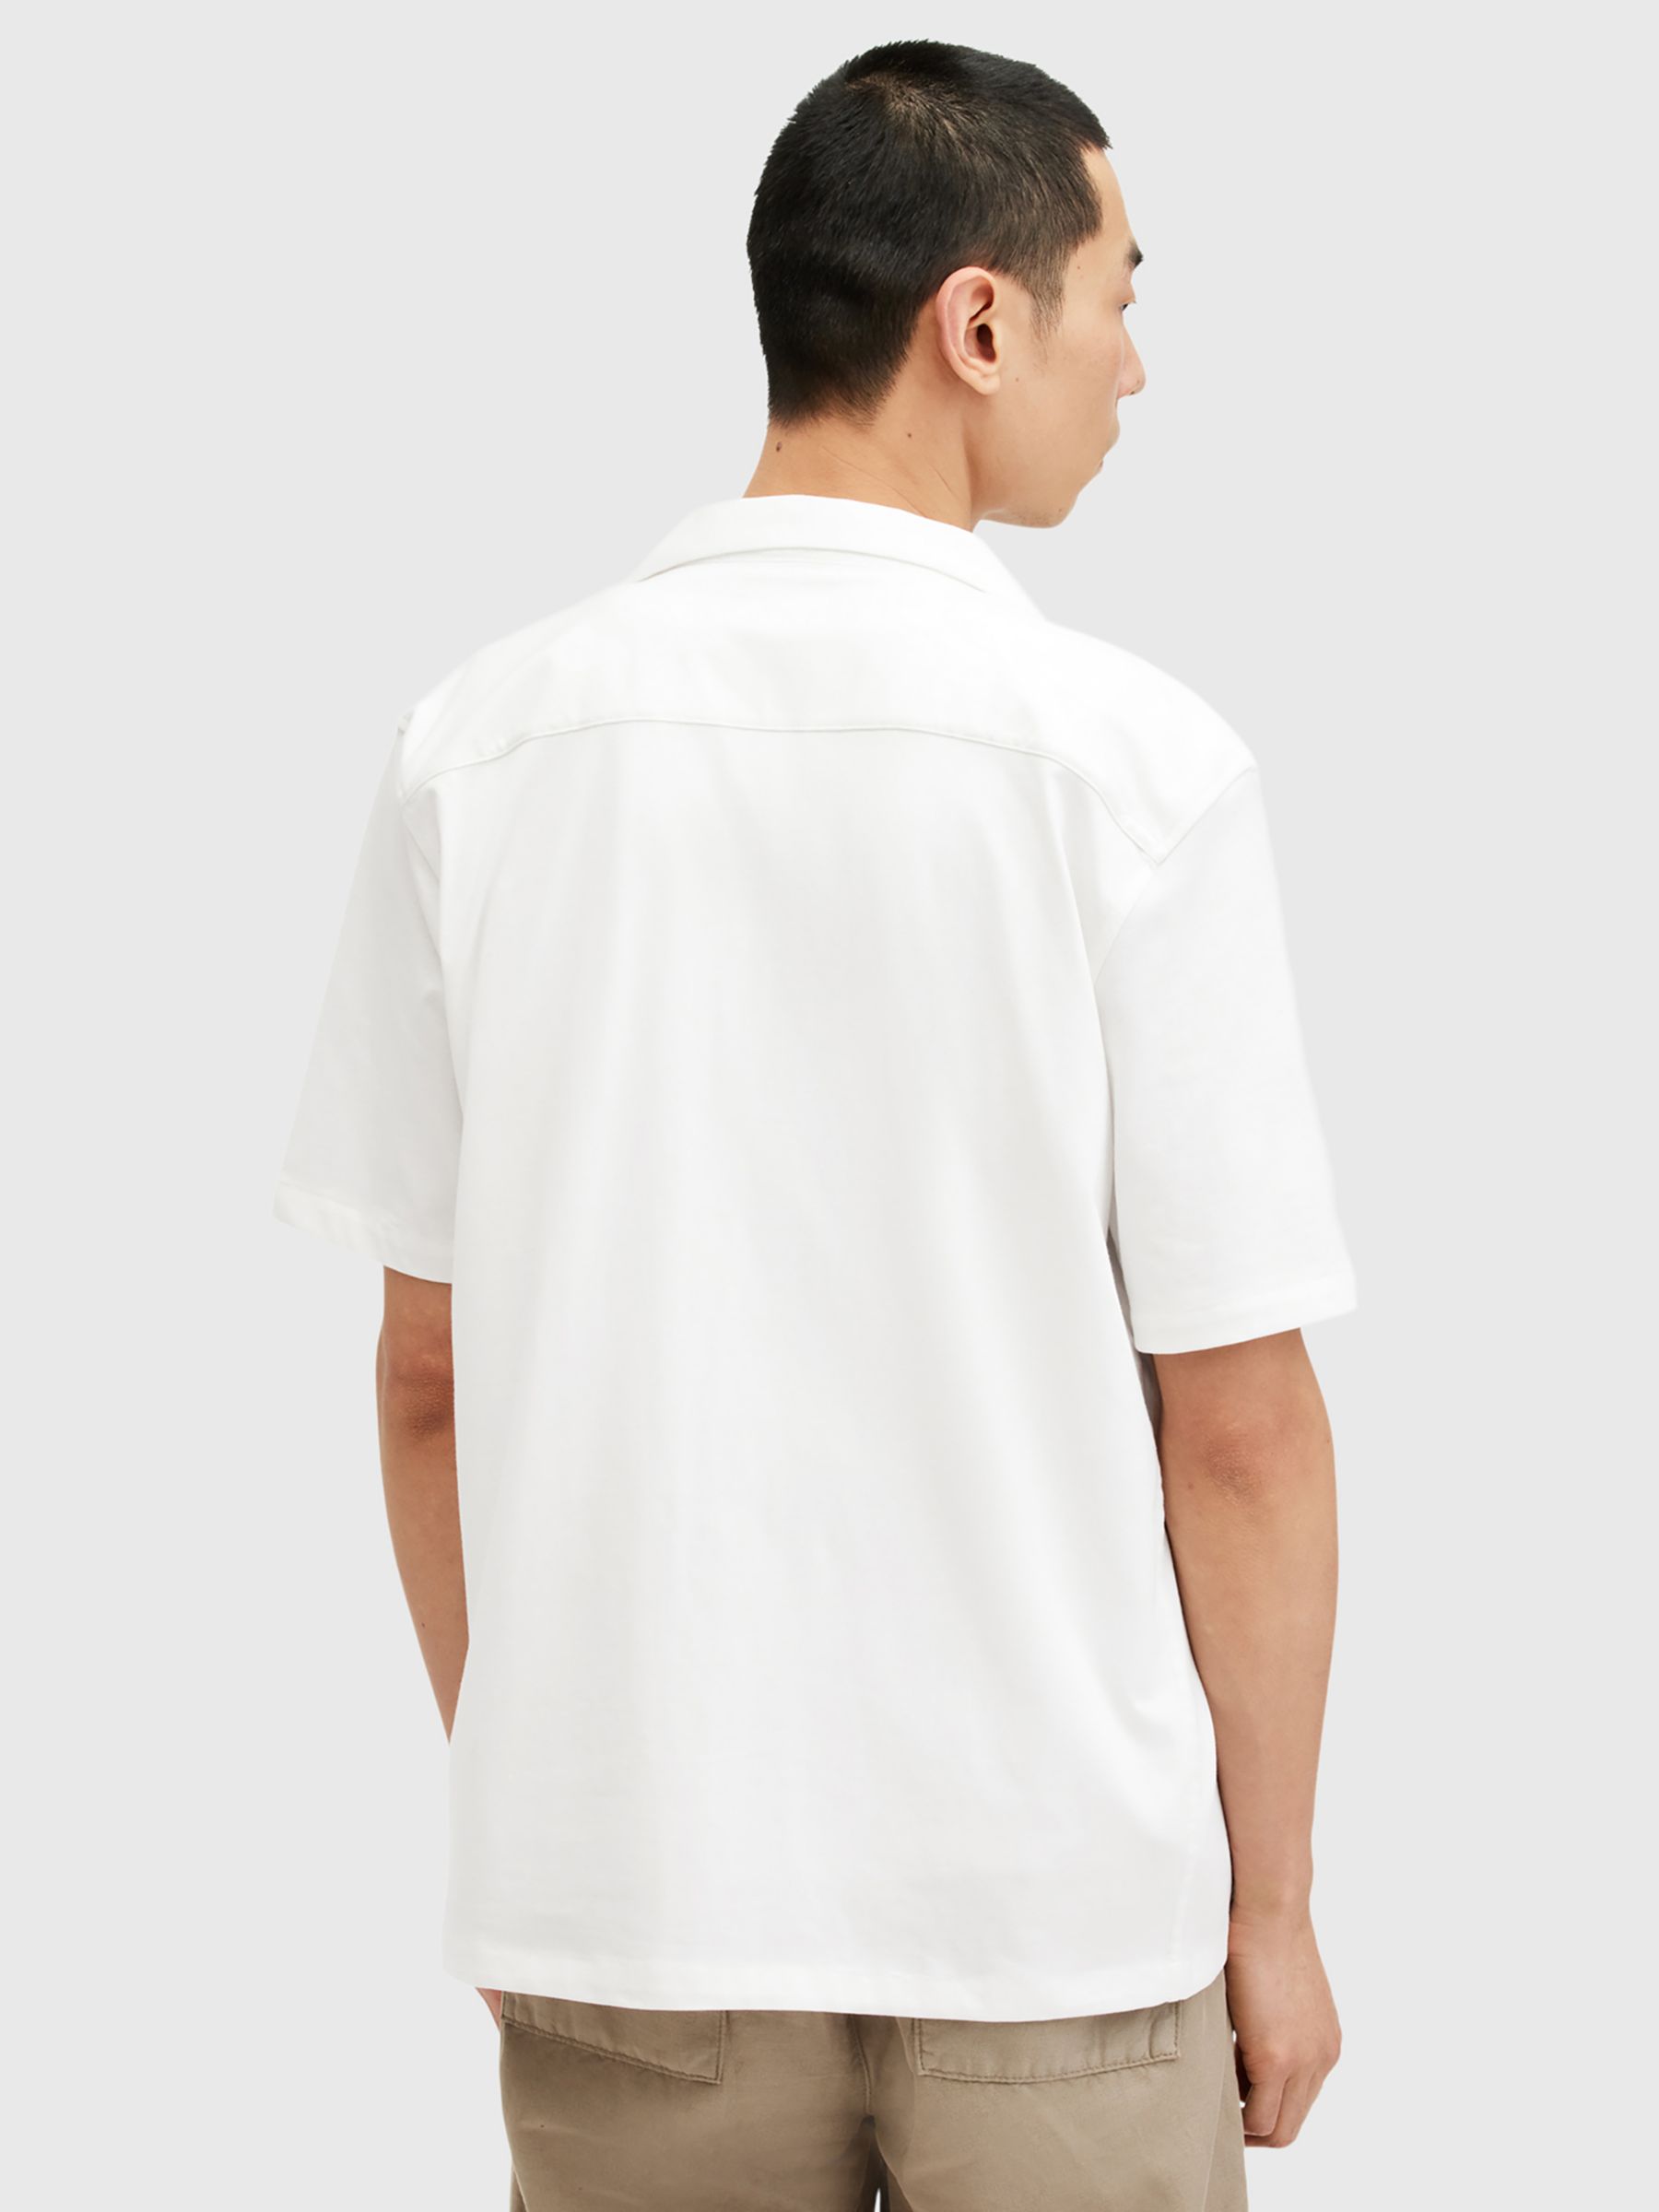 Buy AllSaints Hudson Short Sleeve Shirt Online at johnlewis.com